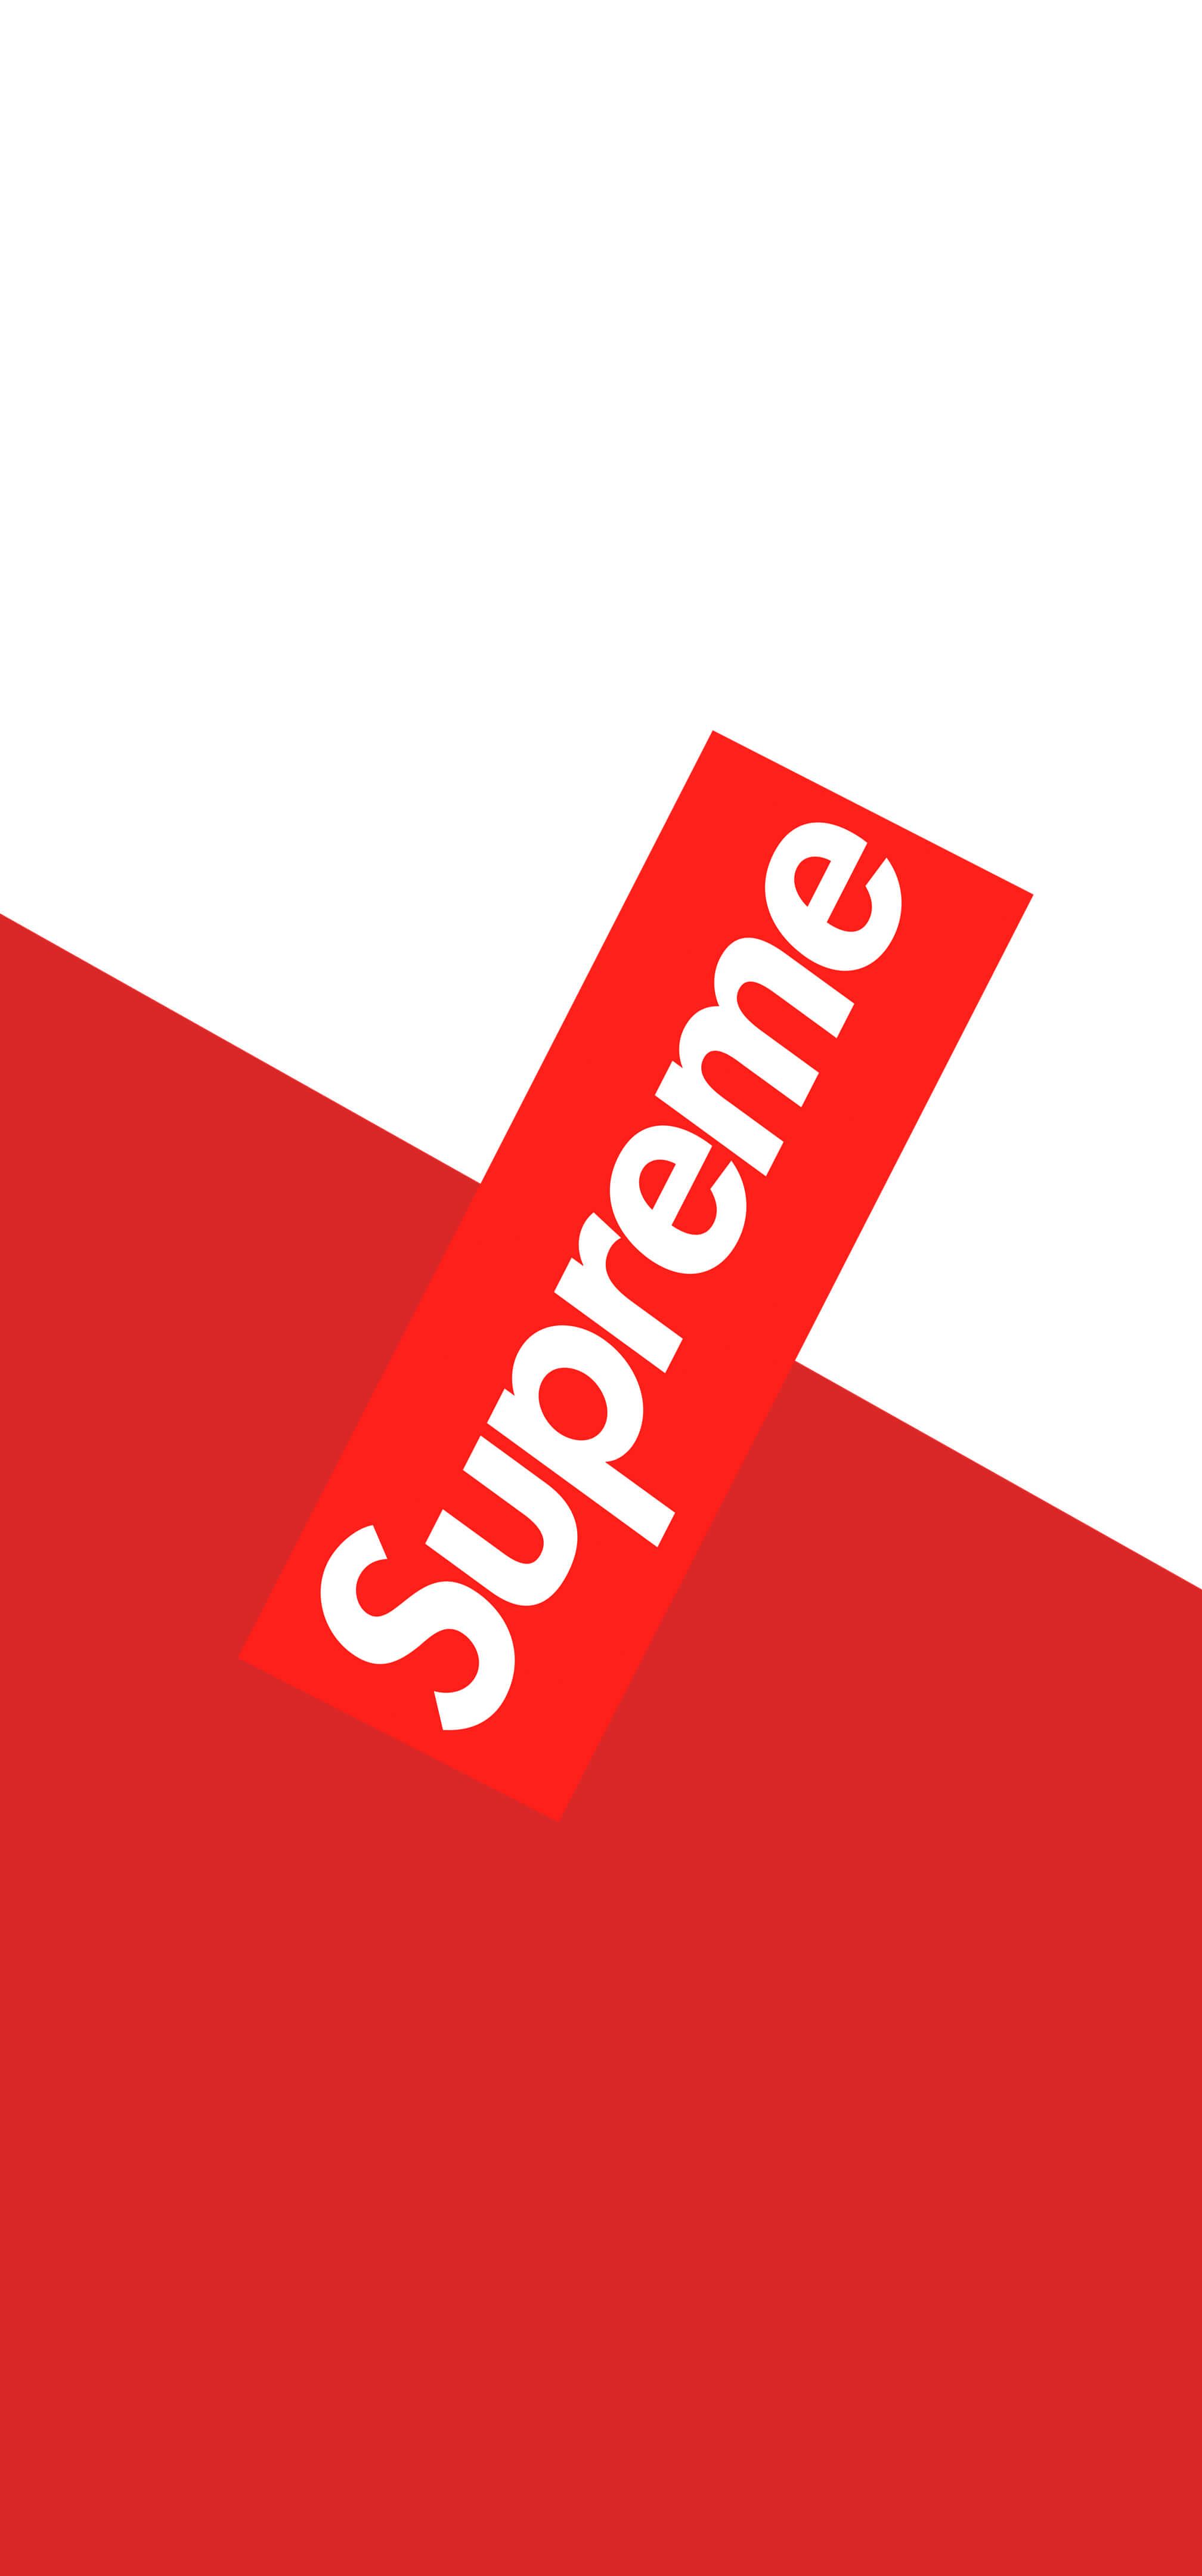 Supreme Logo Wallpapers - Wallpaper Cave